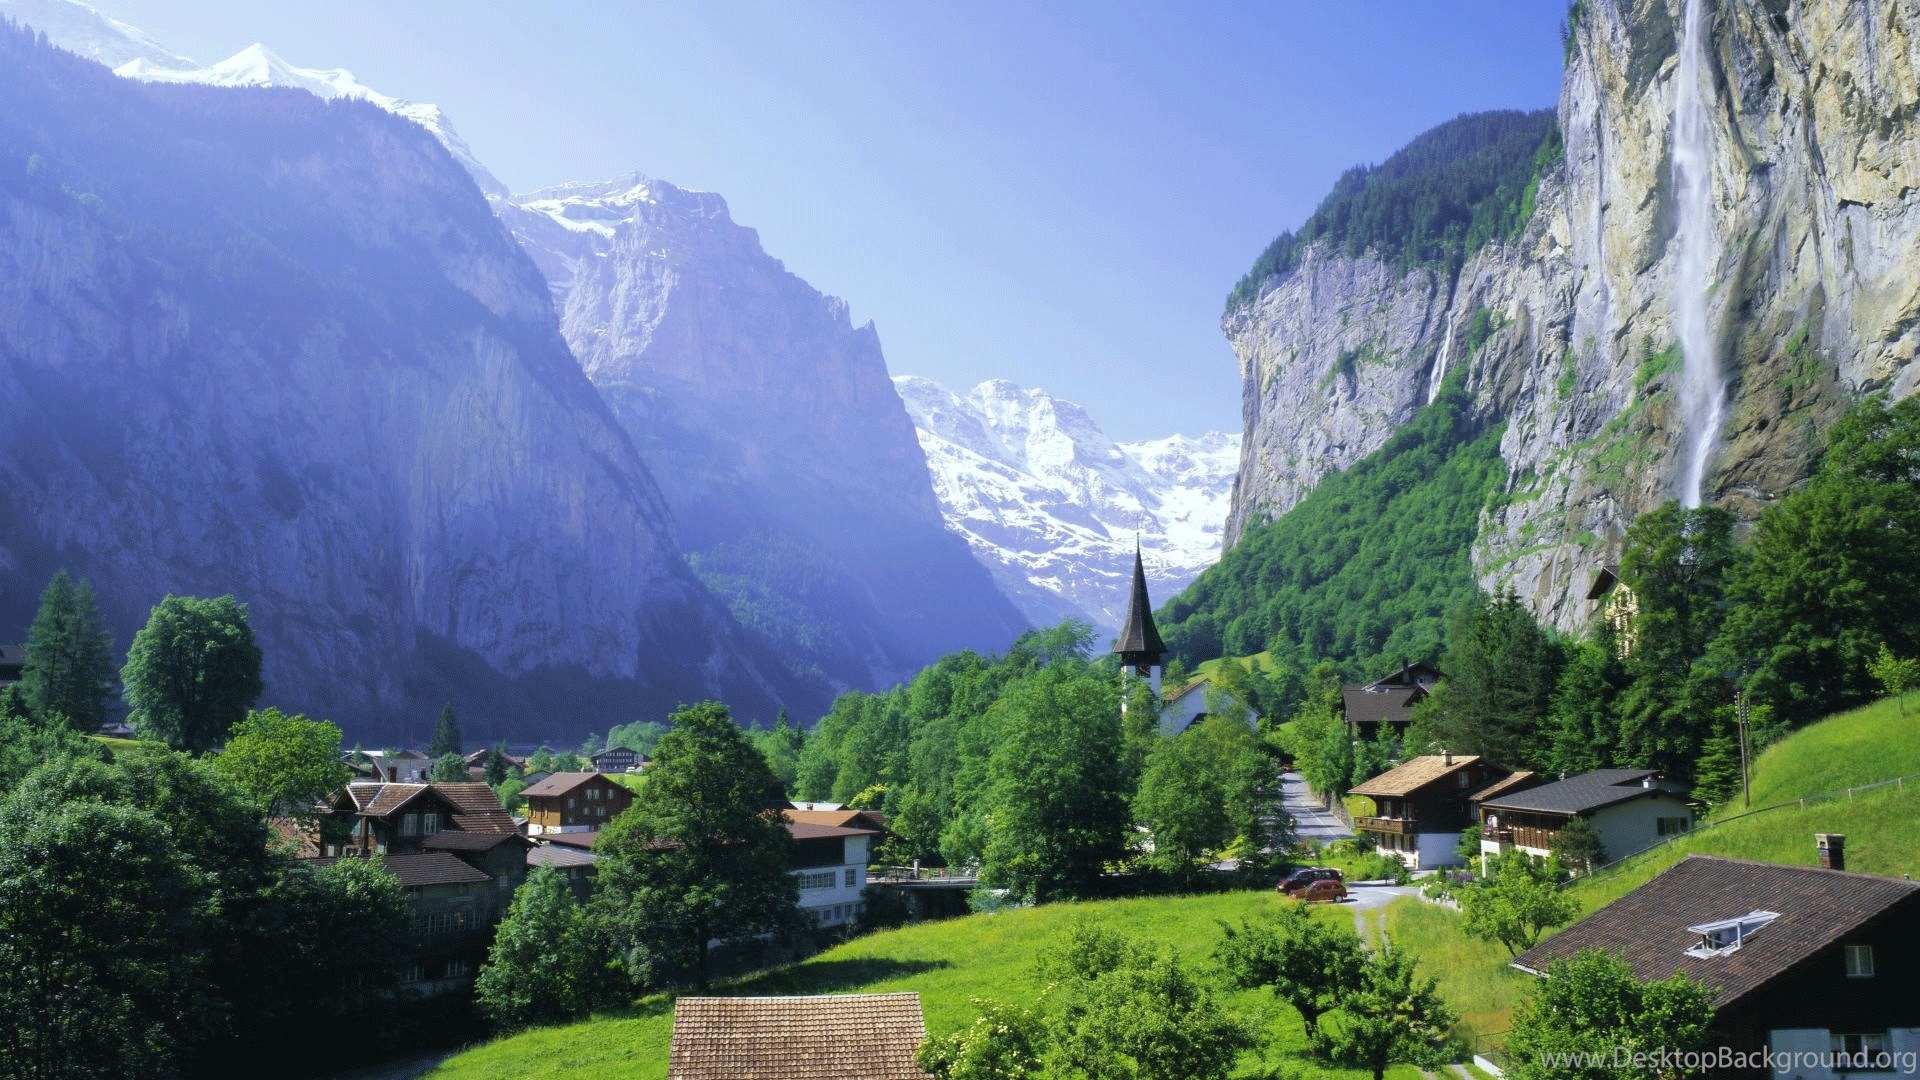 Swiss Alps Hd Wallpaper - Staubbach Falls - HD Wallpaper 